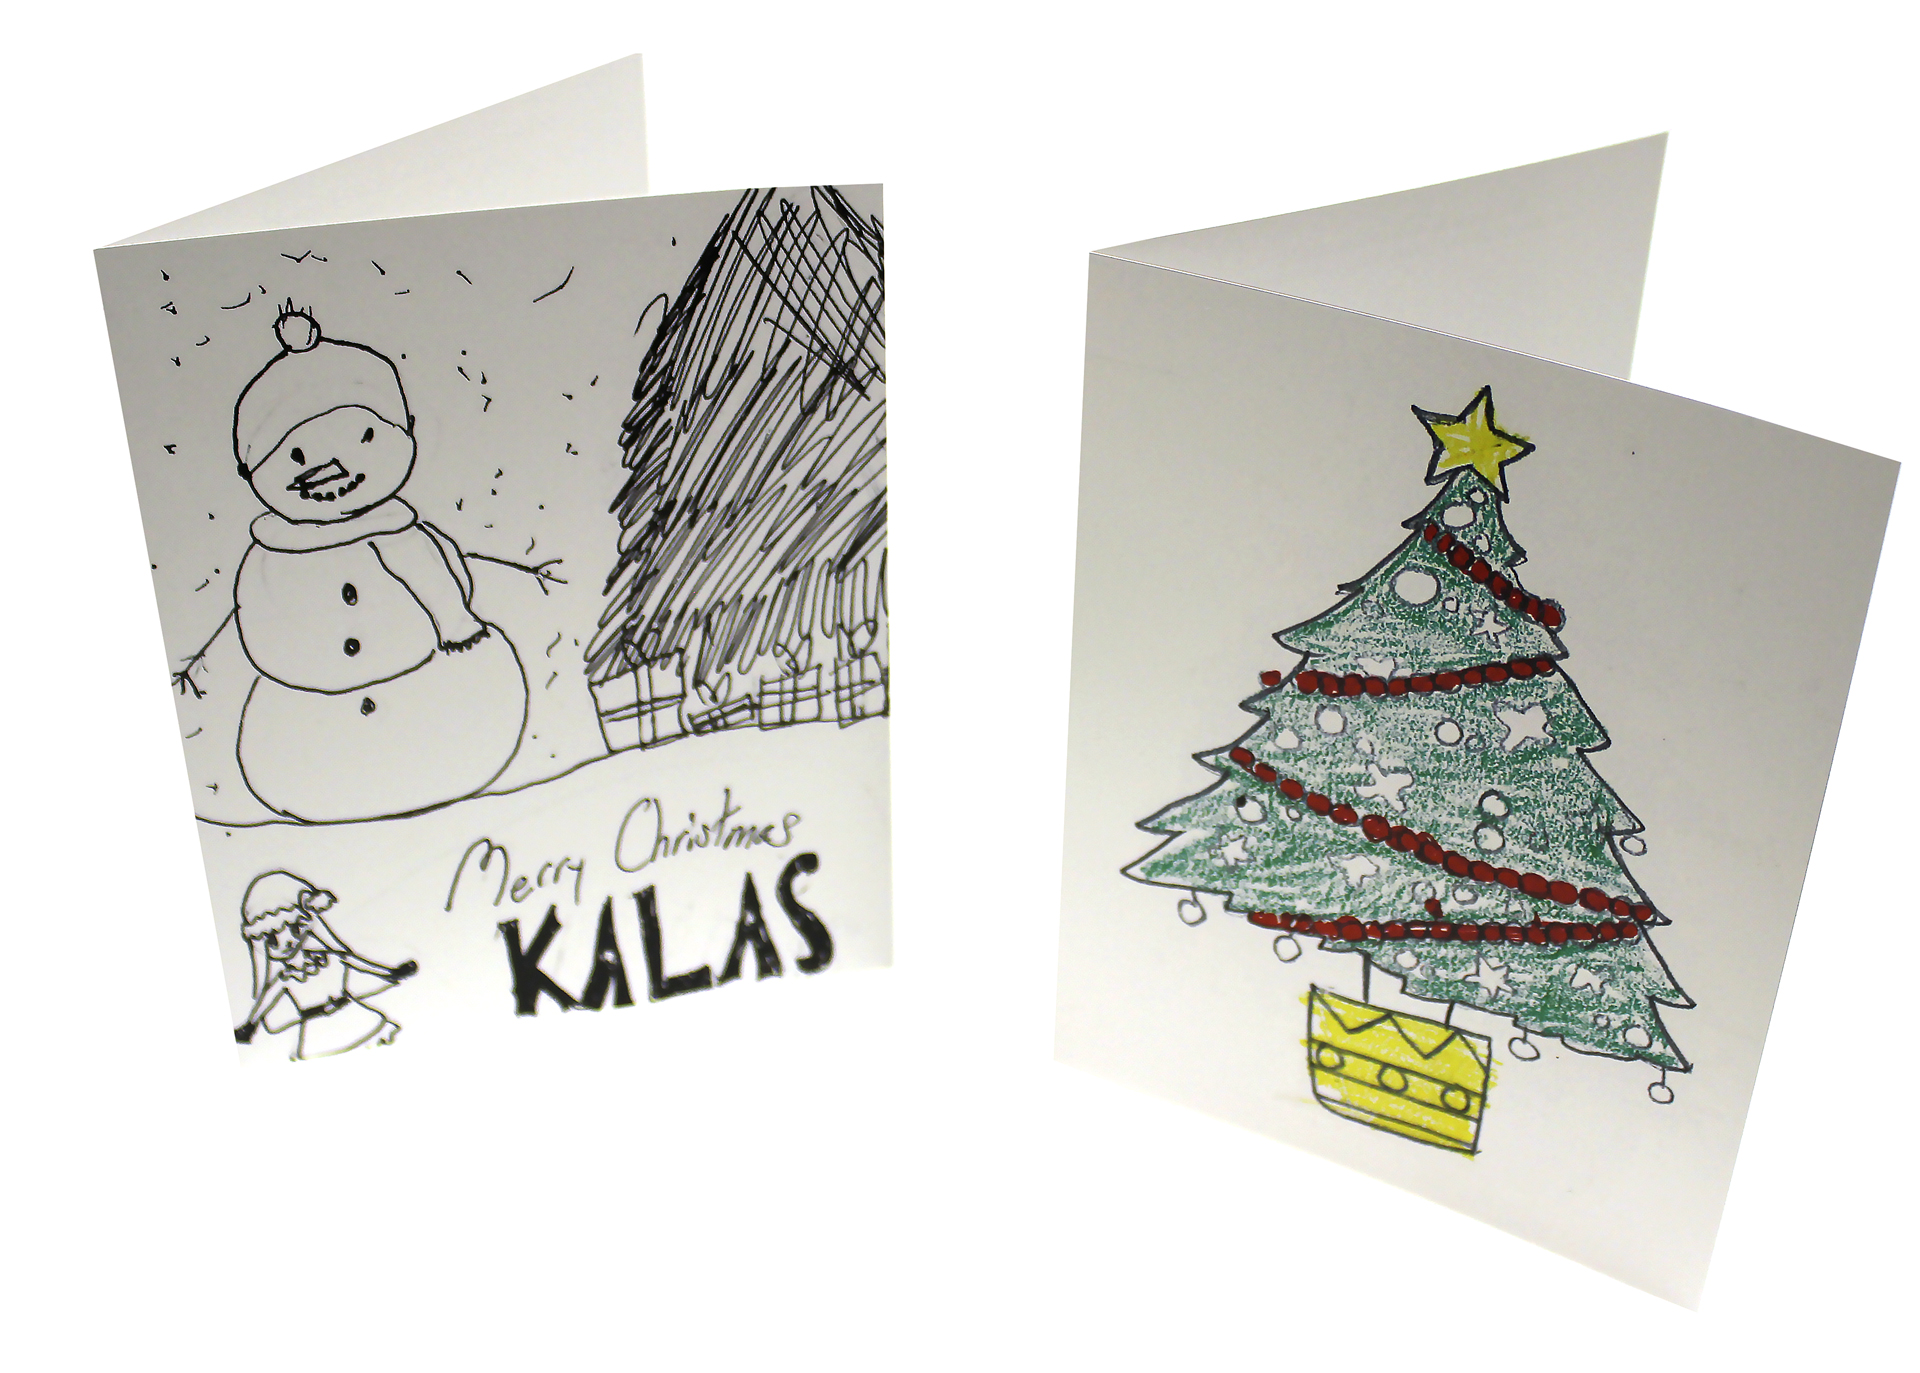 2019 Kalas Holiday Christmas Card Winners